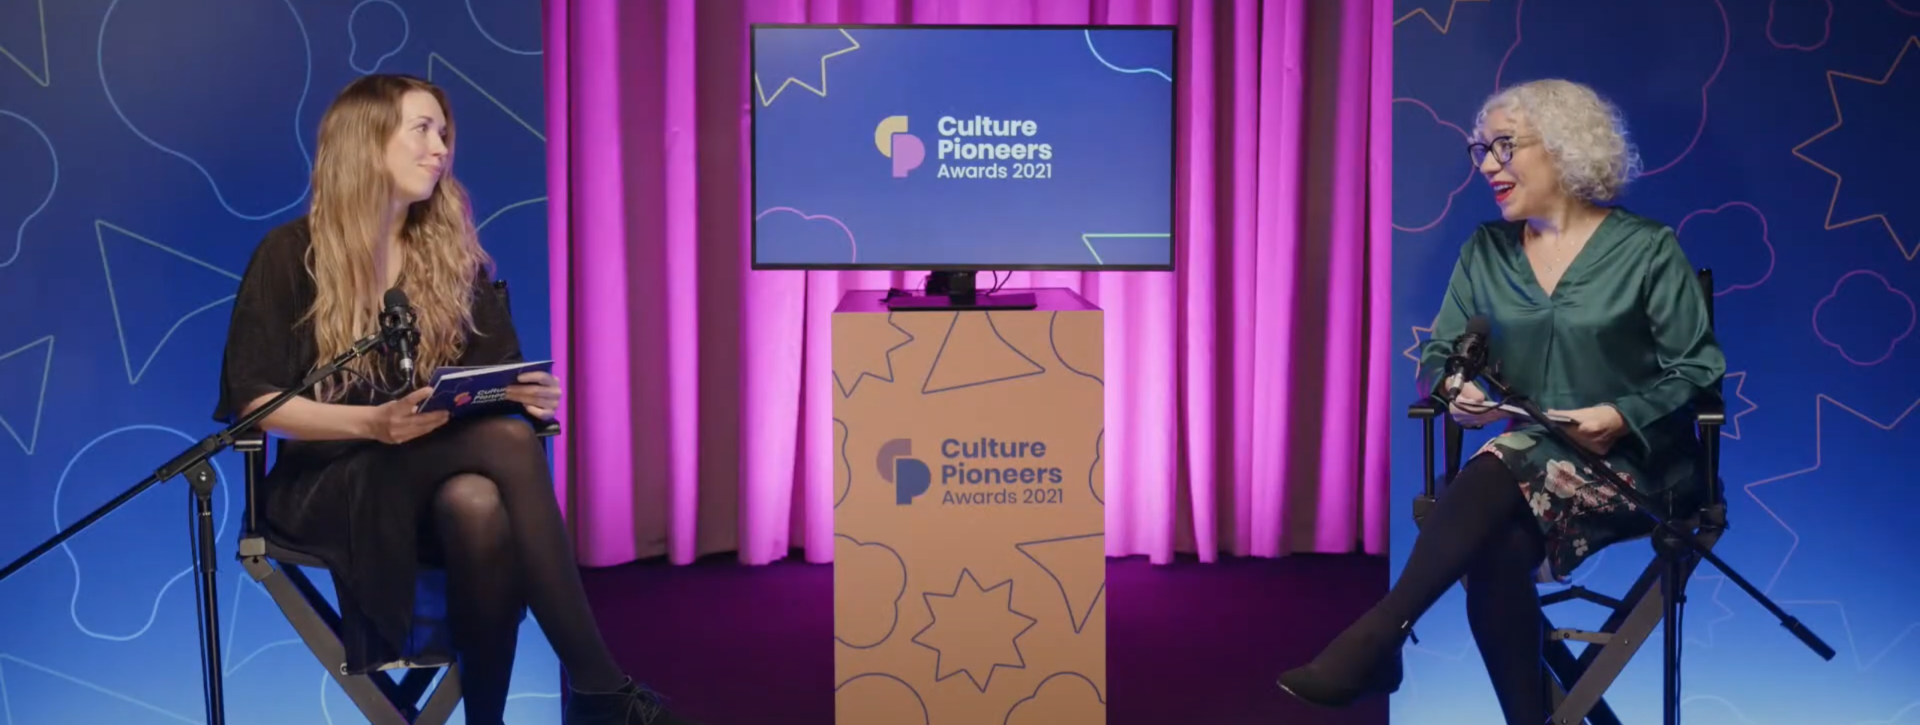 Culture Pioneers Awards